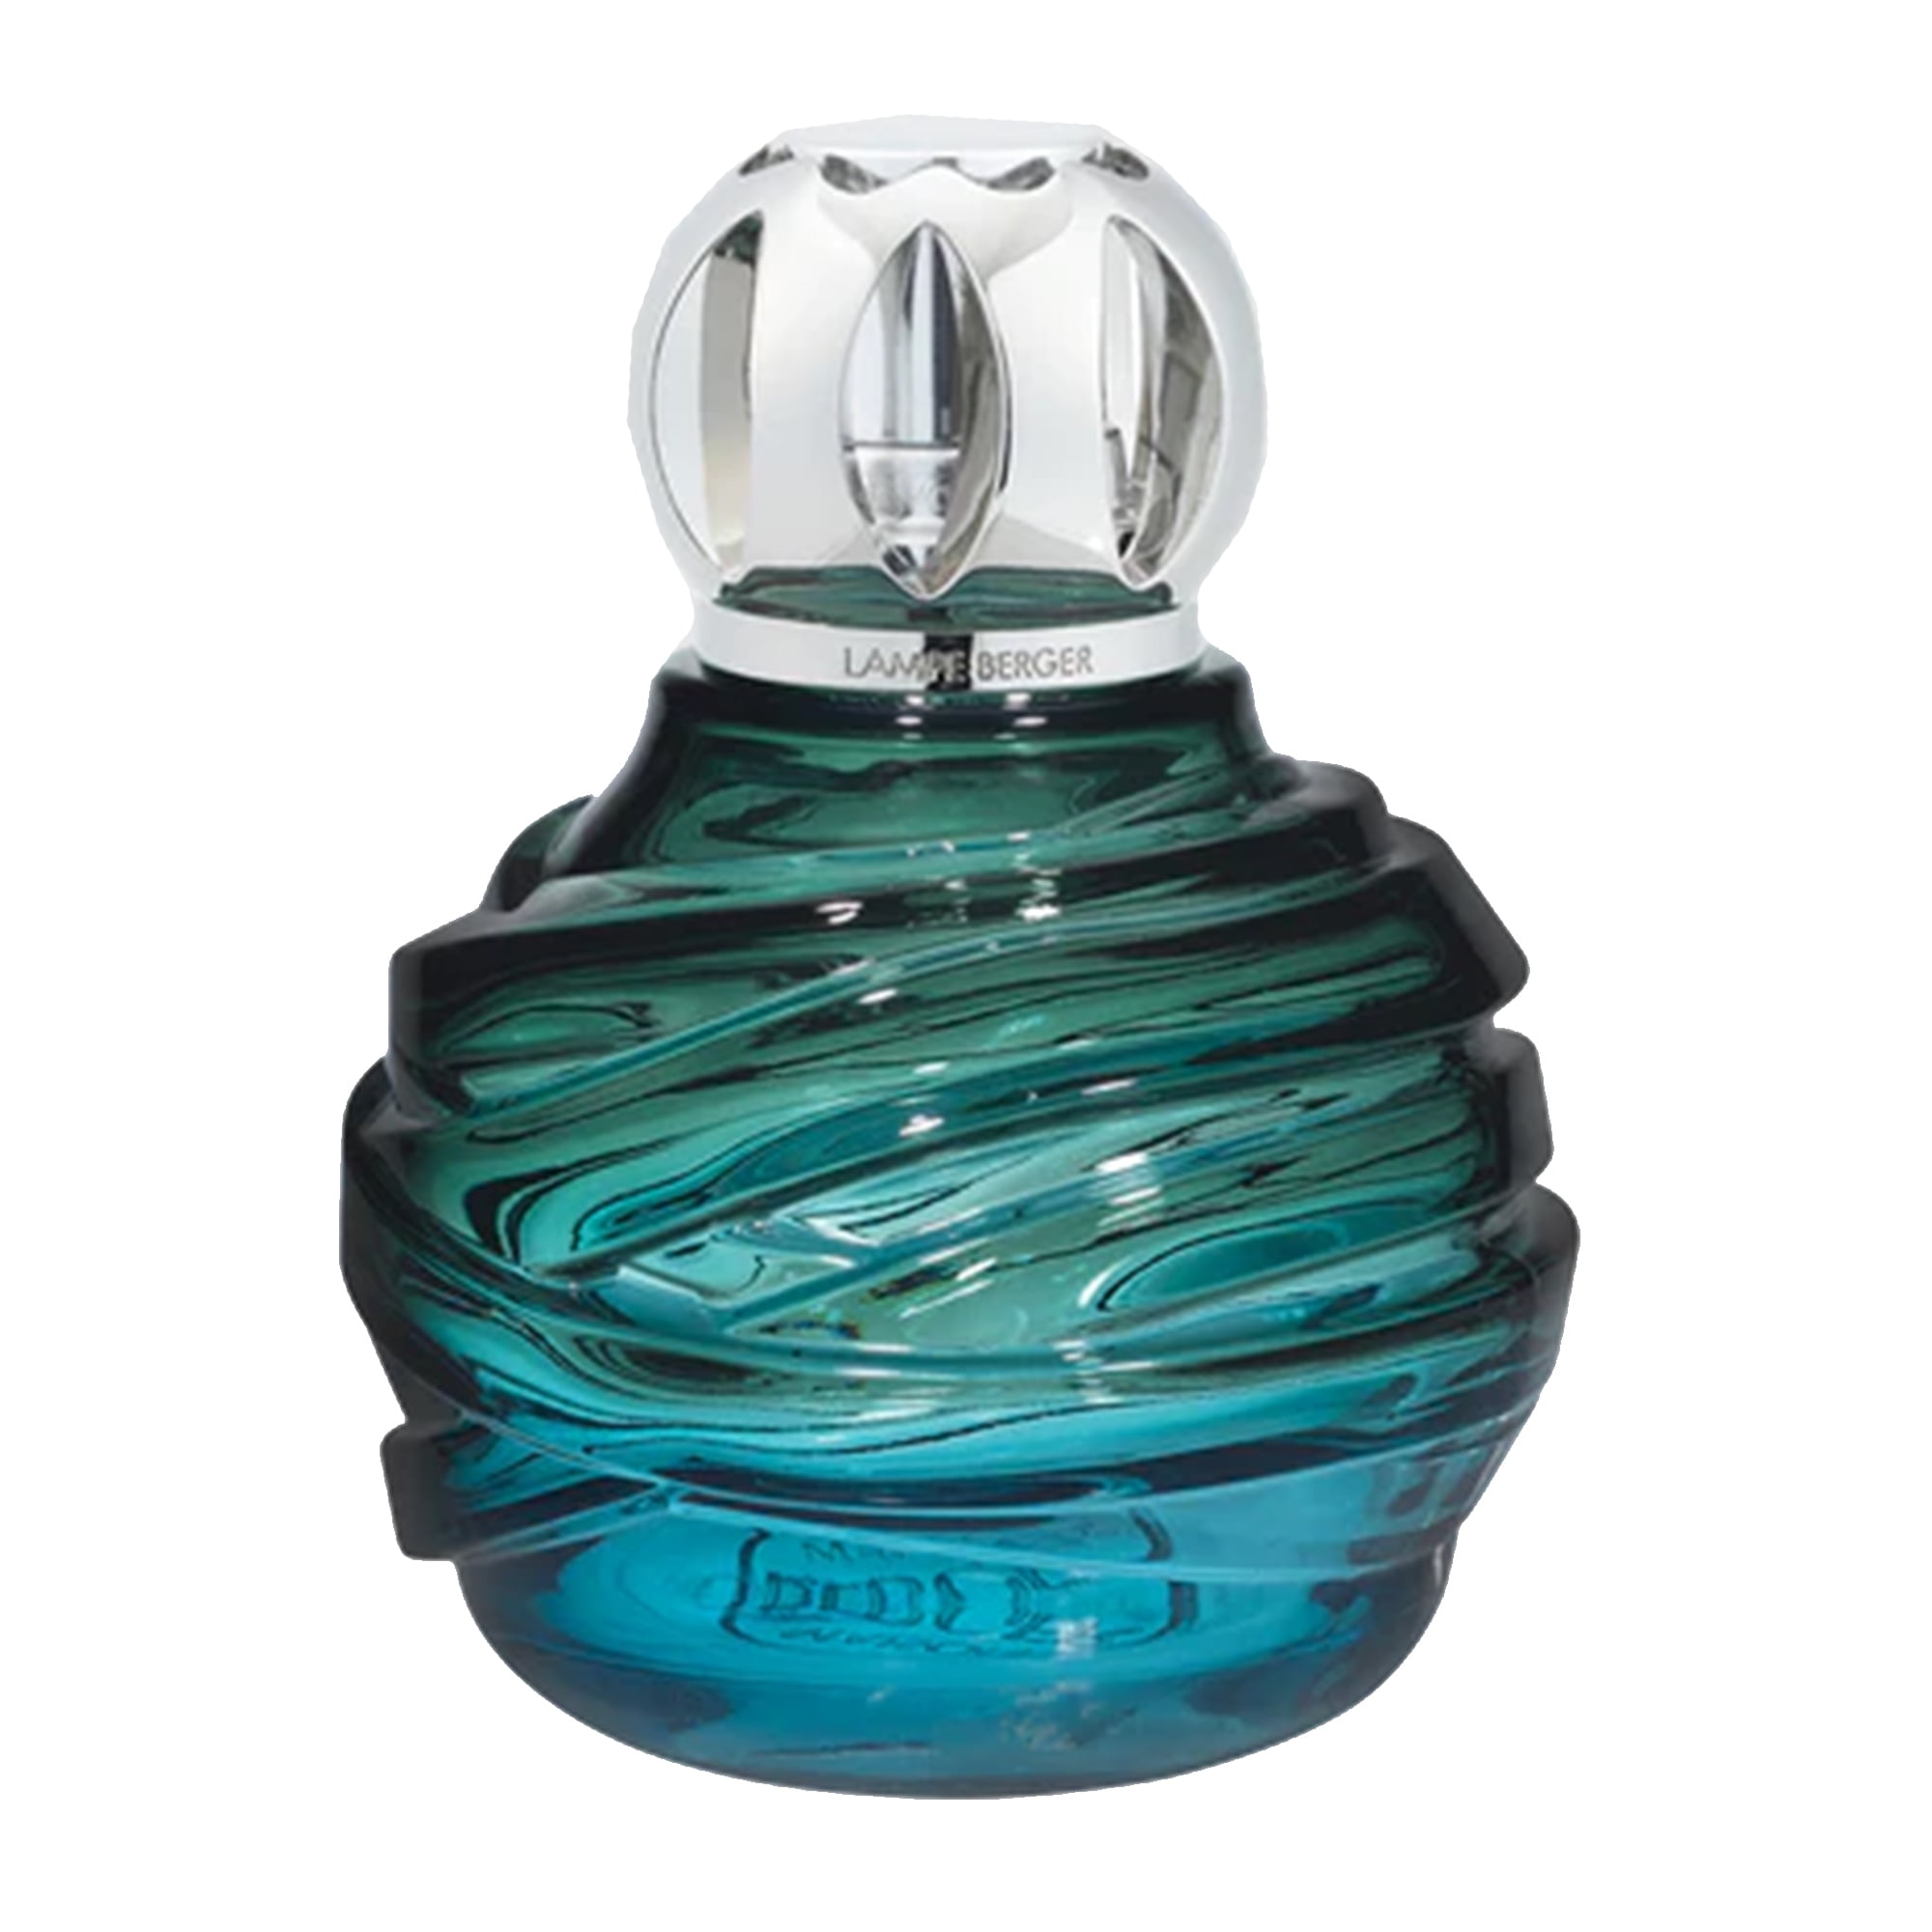 MAISON BERGER - Lampe Berger Model Dare - Home Fragrance Diffuser